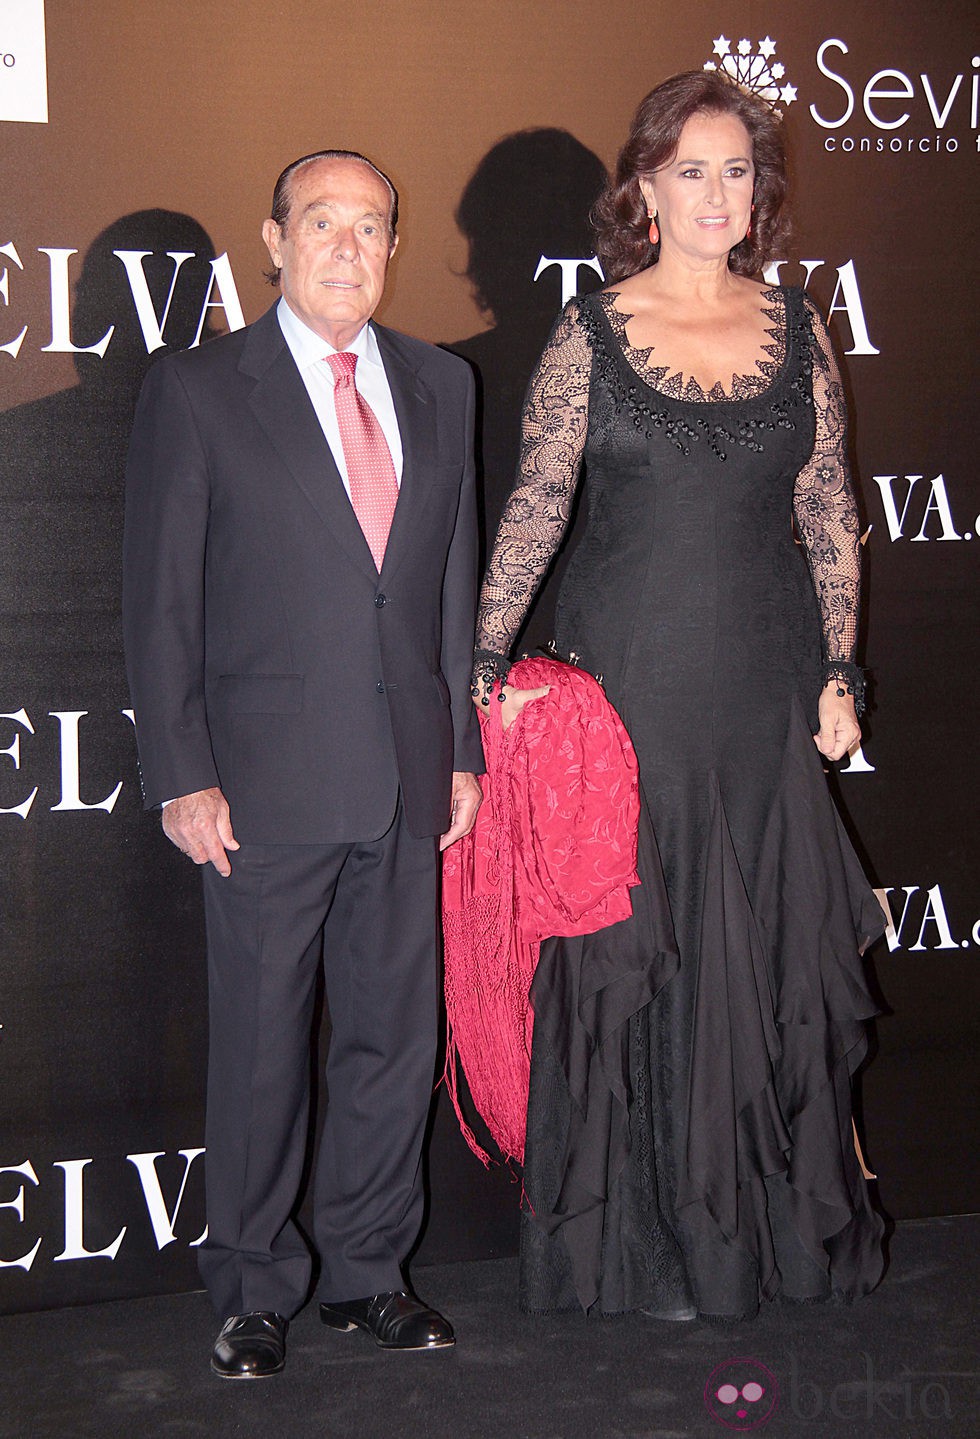 Curro Romero y Carmen Tello en los Premios Telva en Sevilla